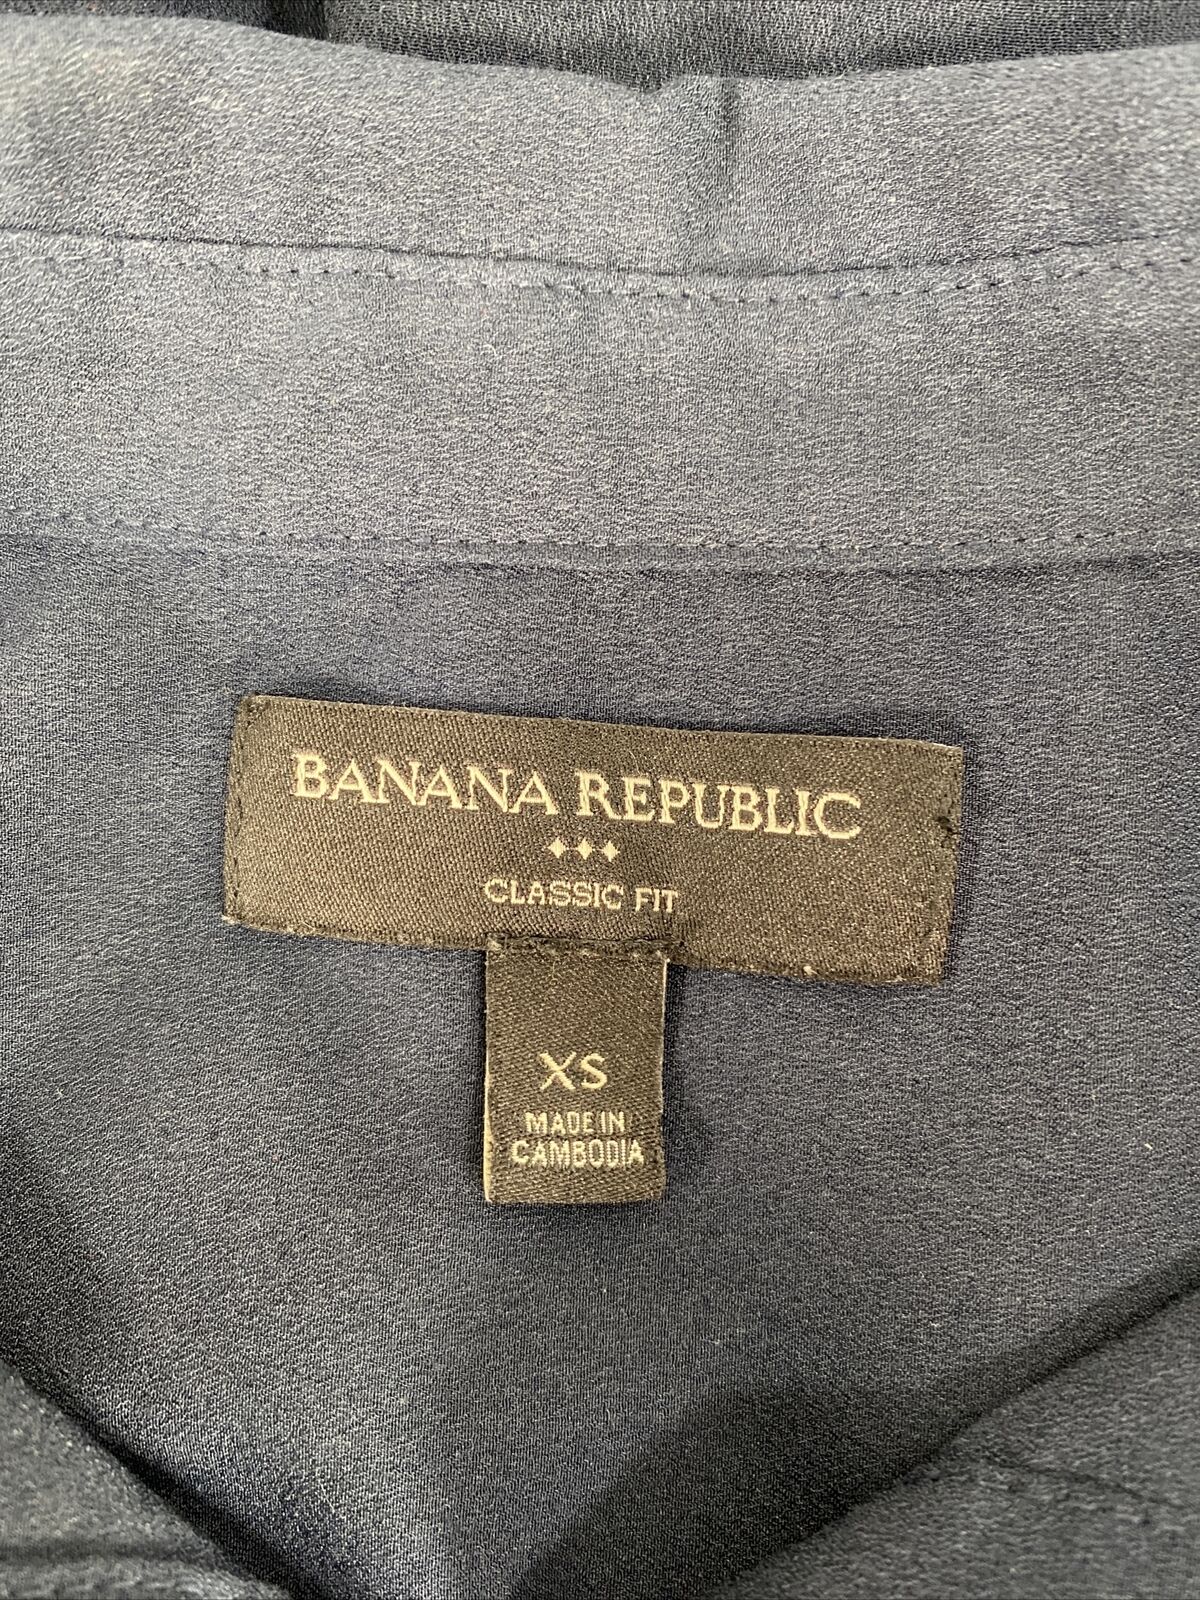 Banana Republic Women's Navy Blue Classic Fit Button Up Blouse Top - XS